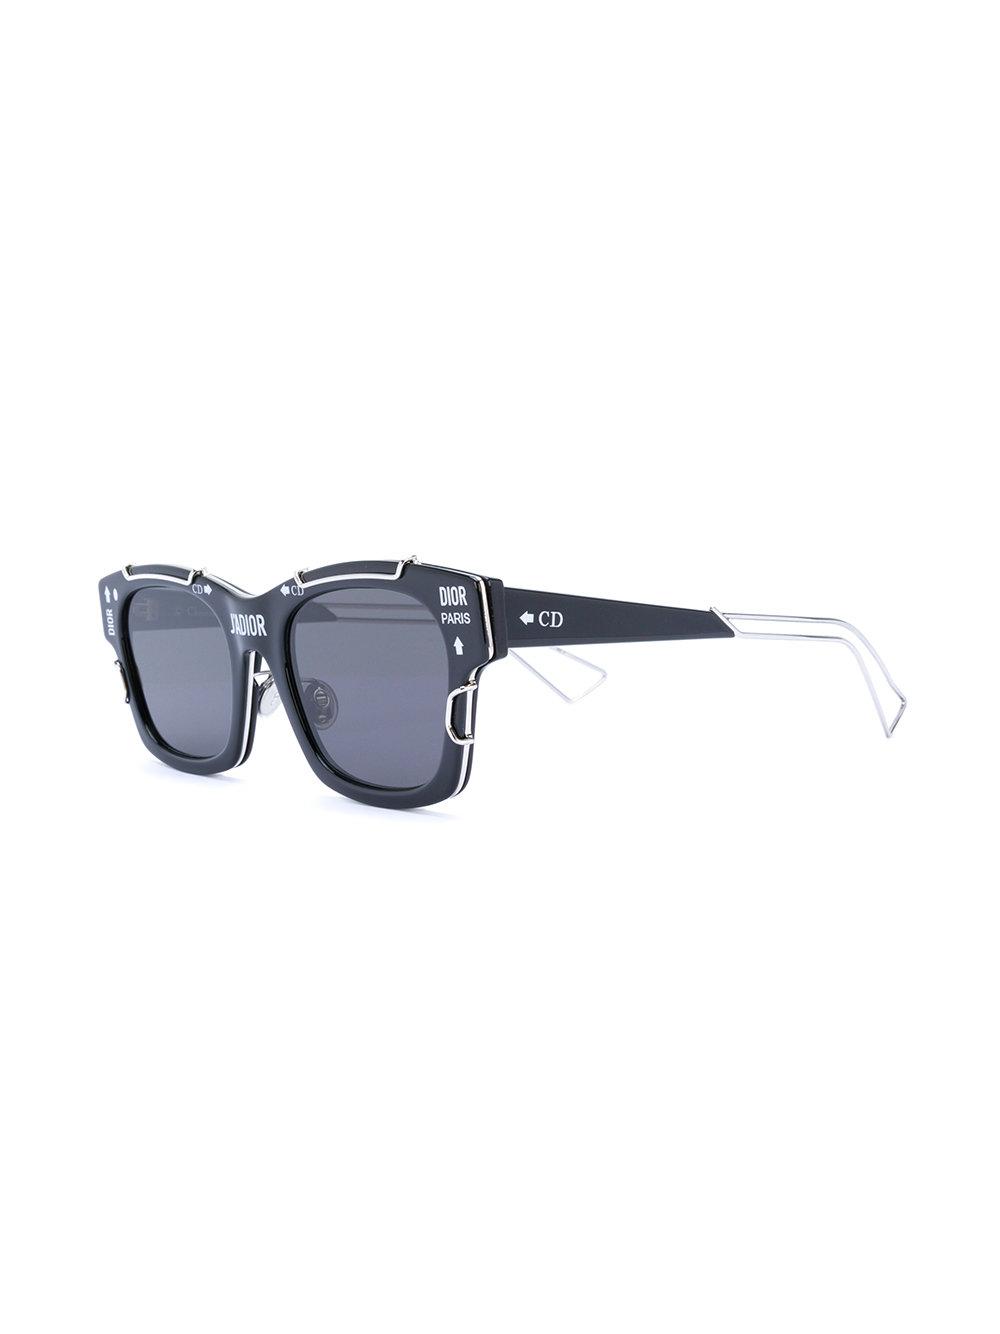 Dior JADIOR Sunglasses  Fashion Fashion wear Sunglasses